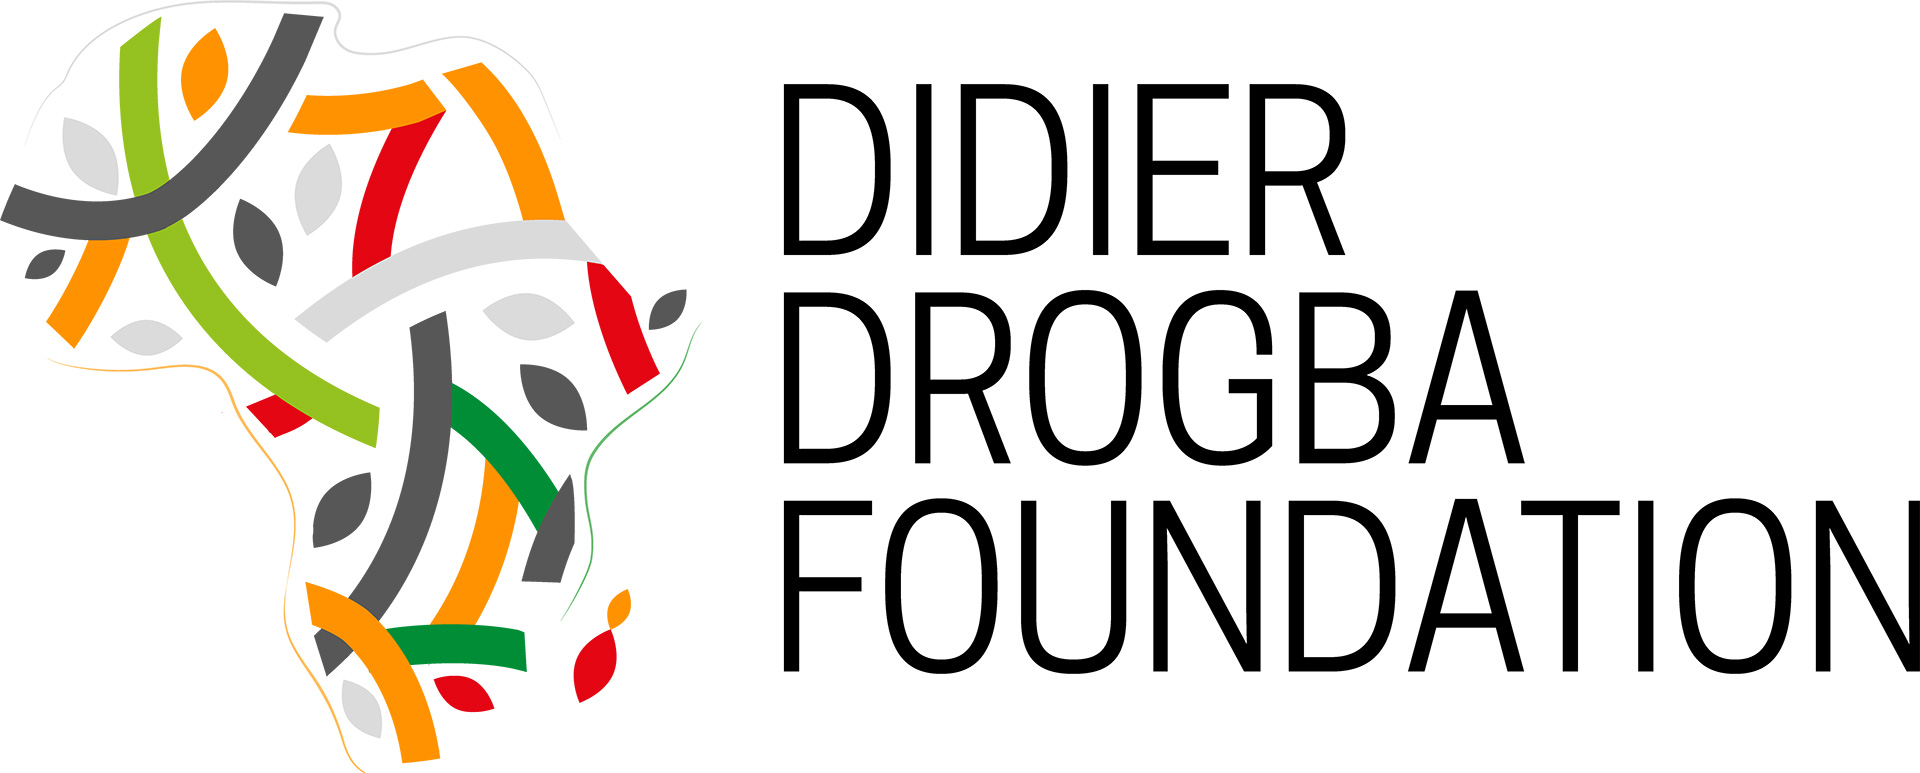 Fondation Didier Drogba